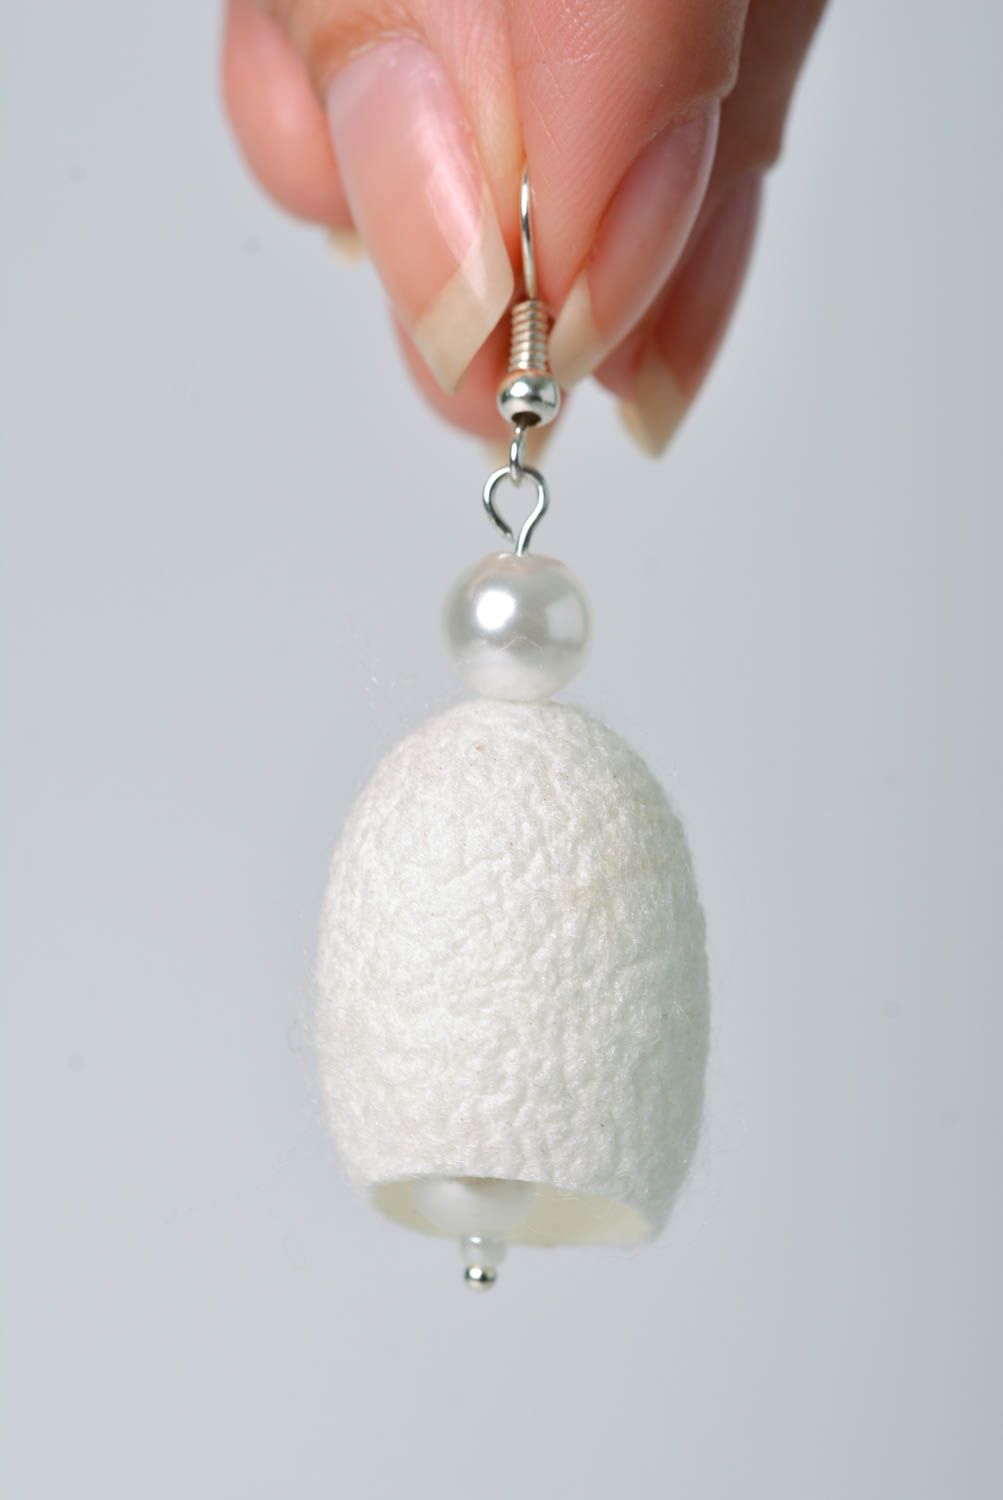 Handmade earrings designer earrings unusual gift beads accessory gift ideas photo 3